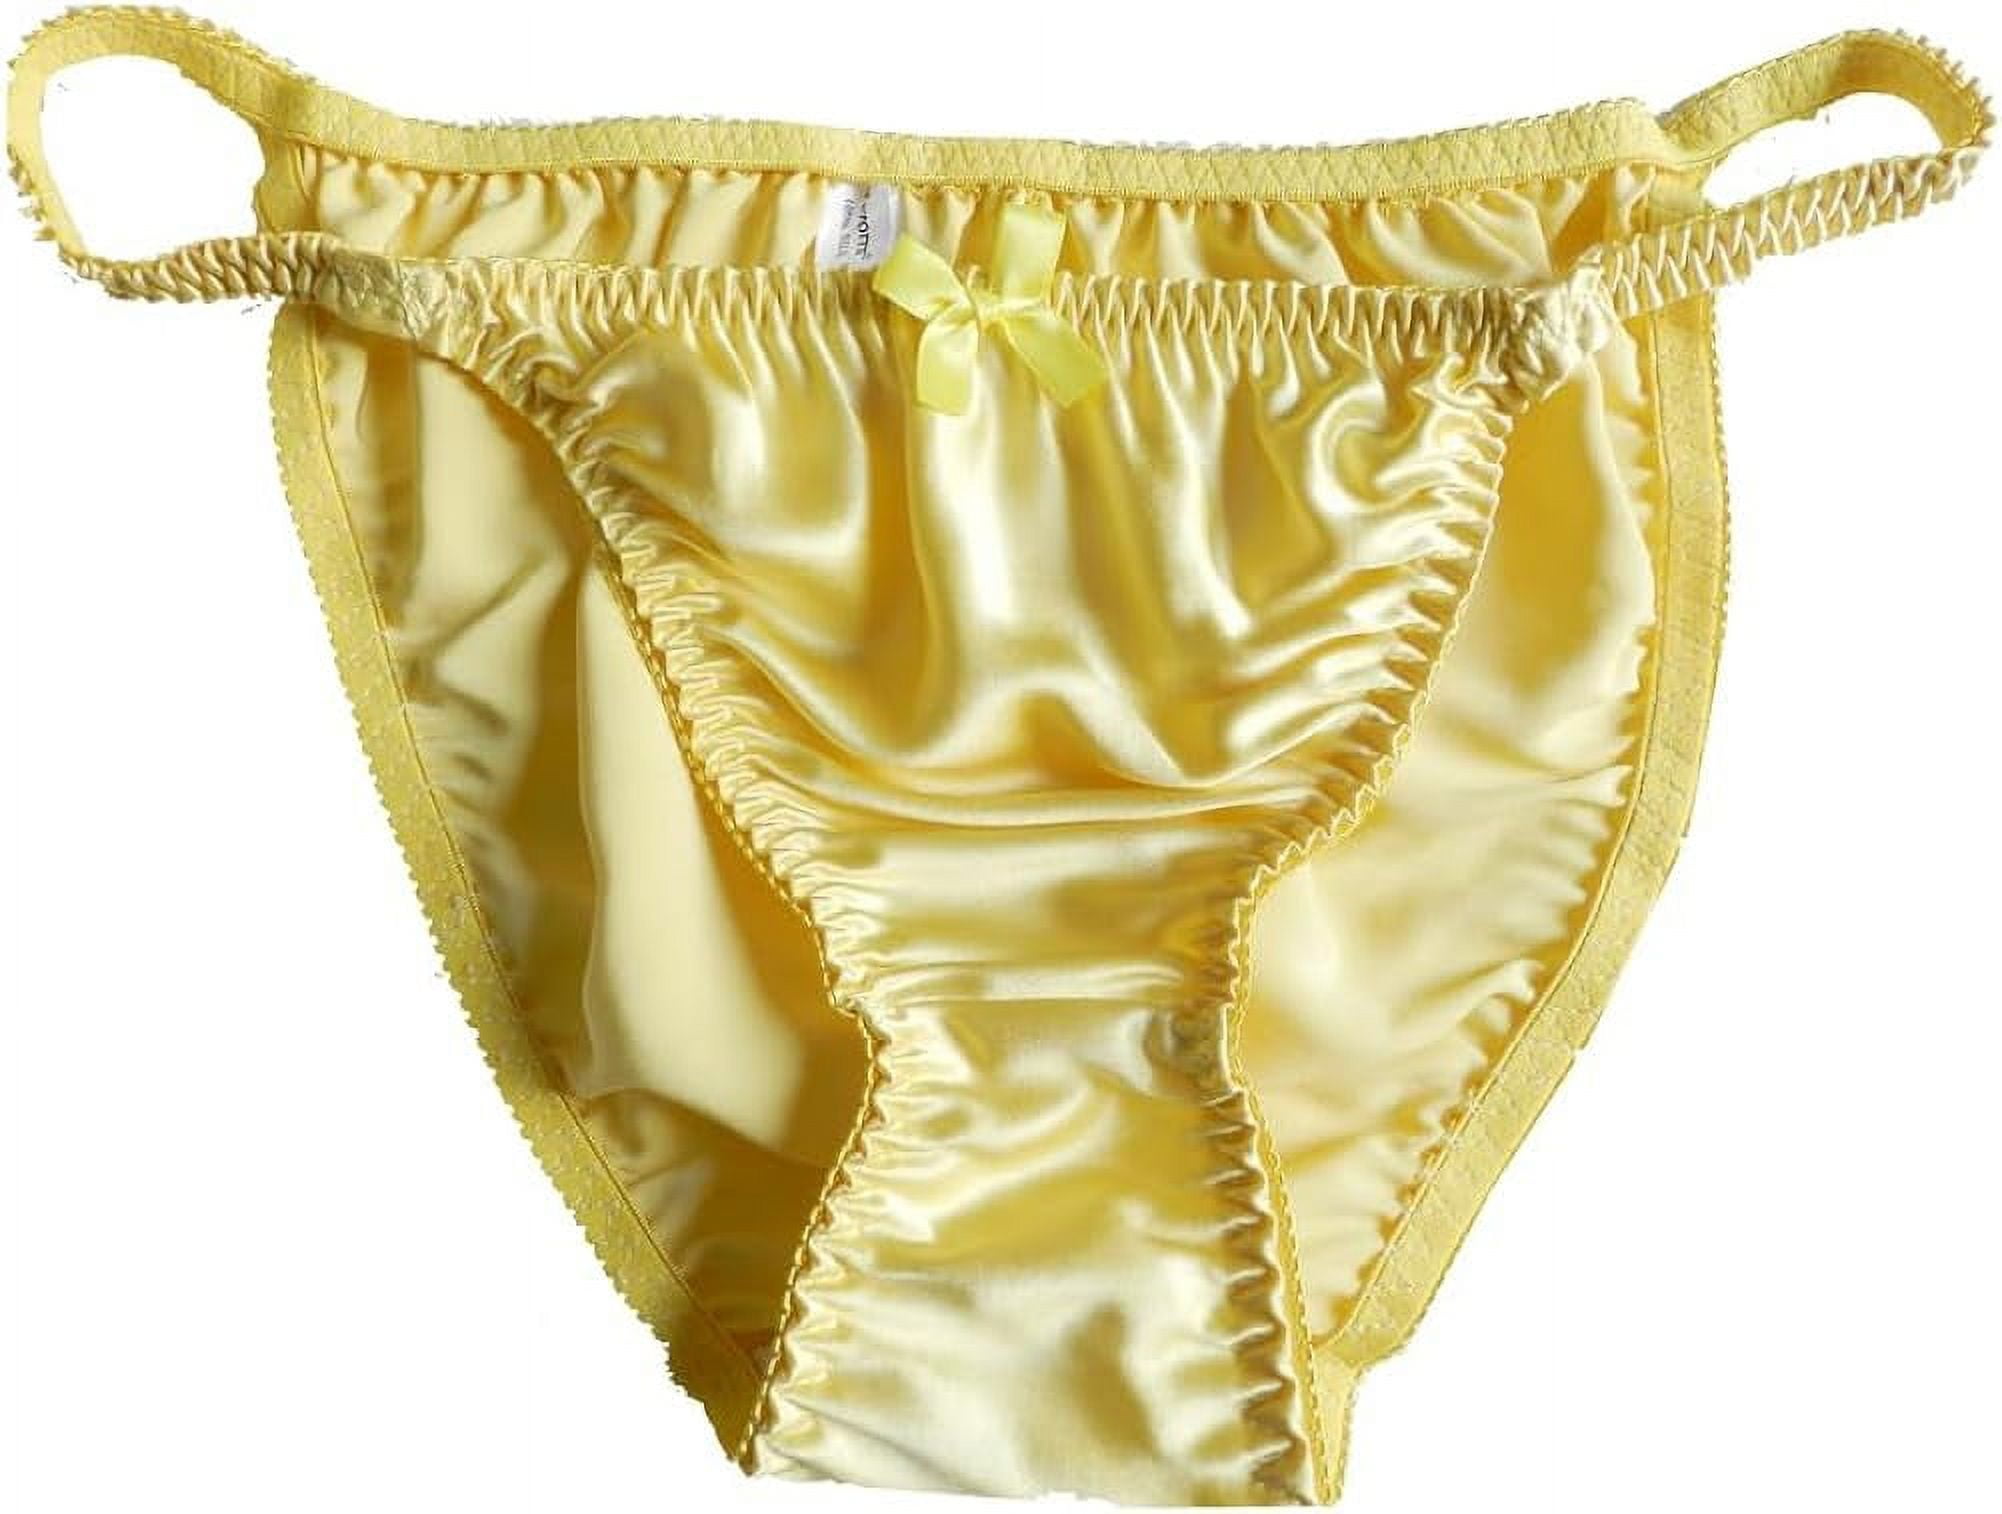 Yavorrs Women's 100% Mulberry Silk Panties String Bikini 